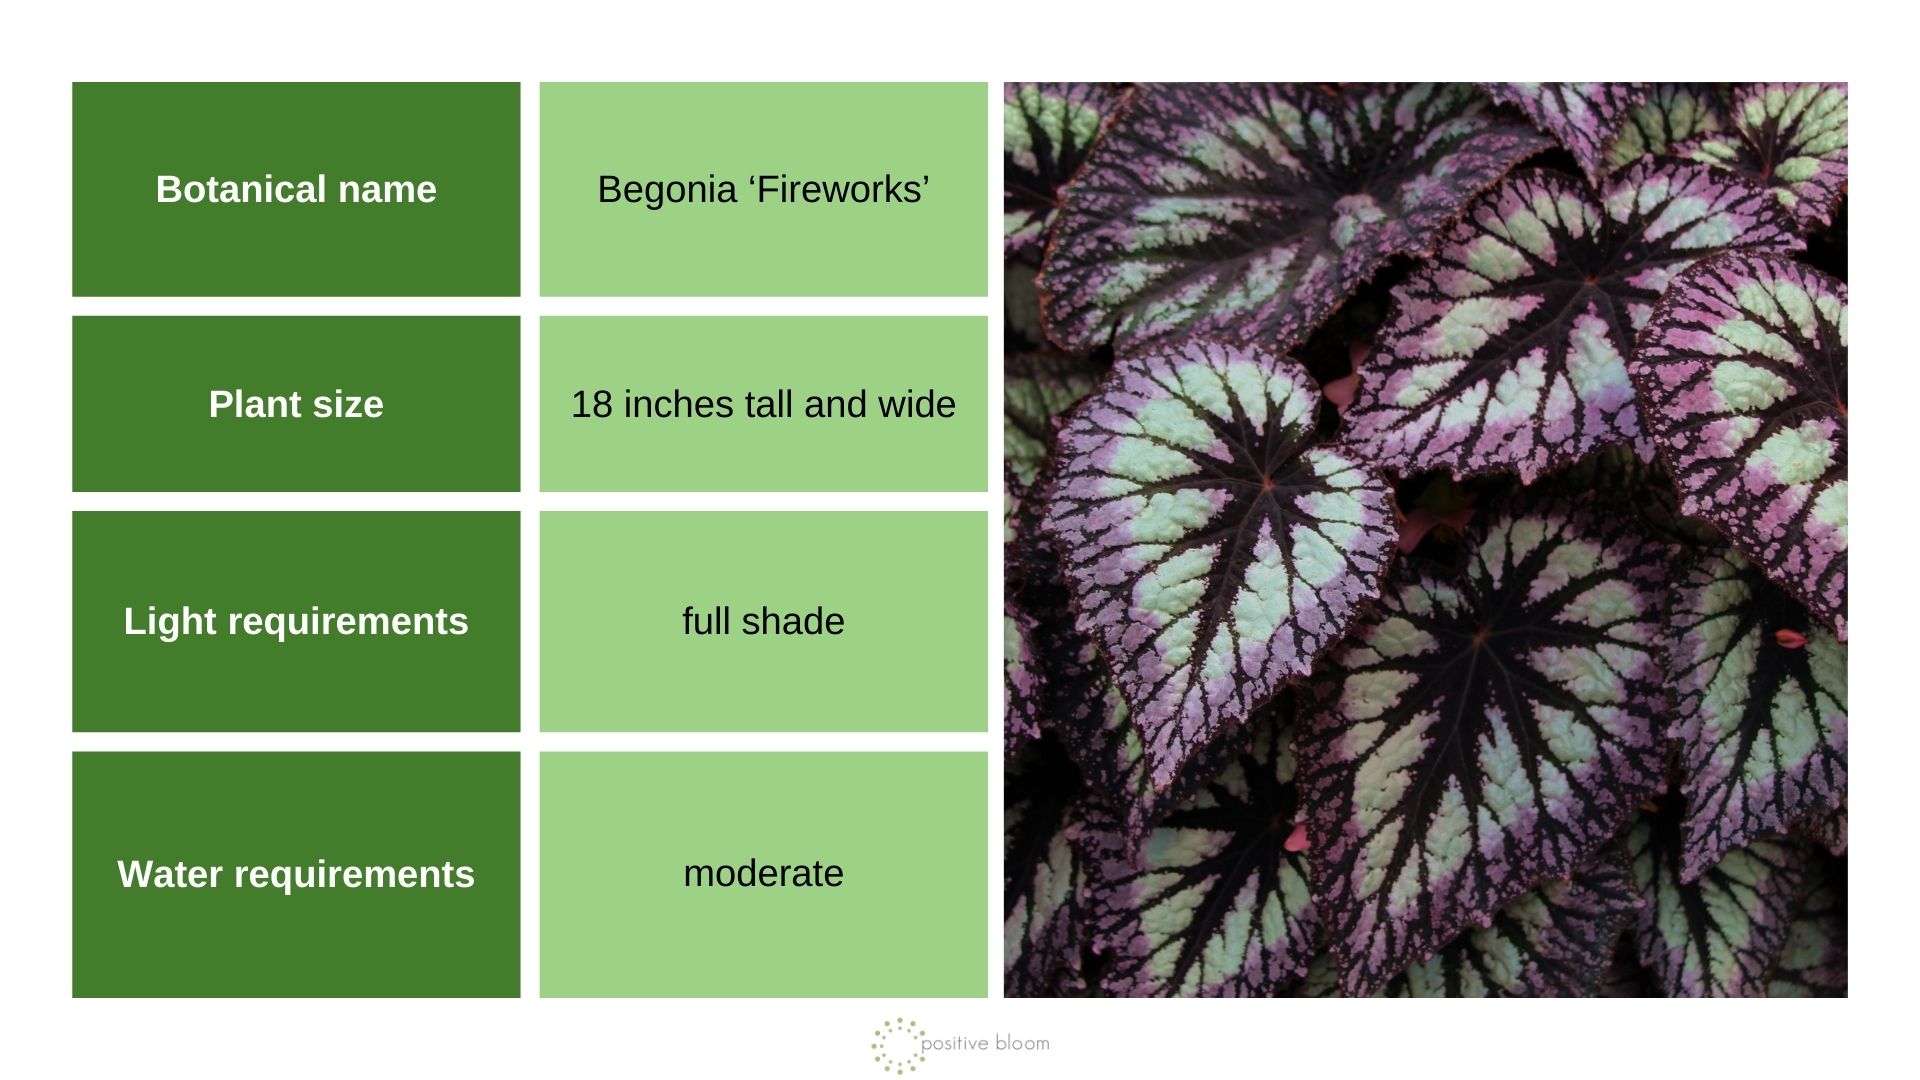 Begonia ‘Fireworks’